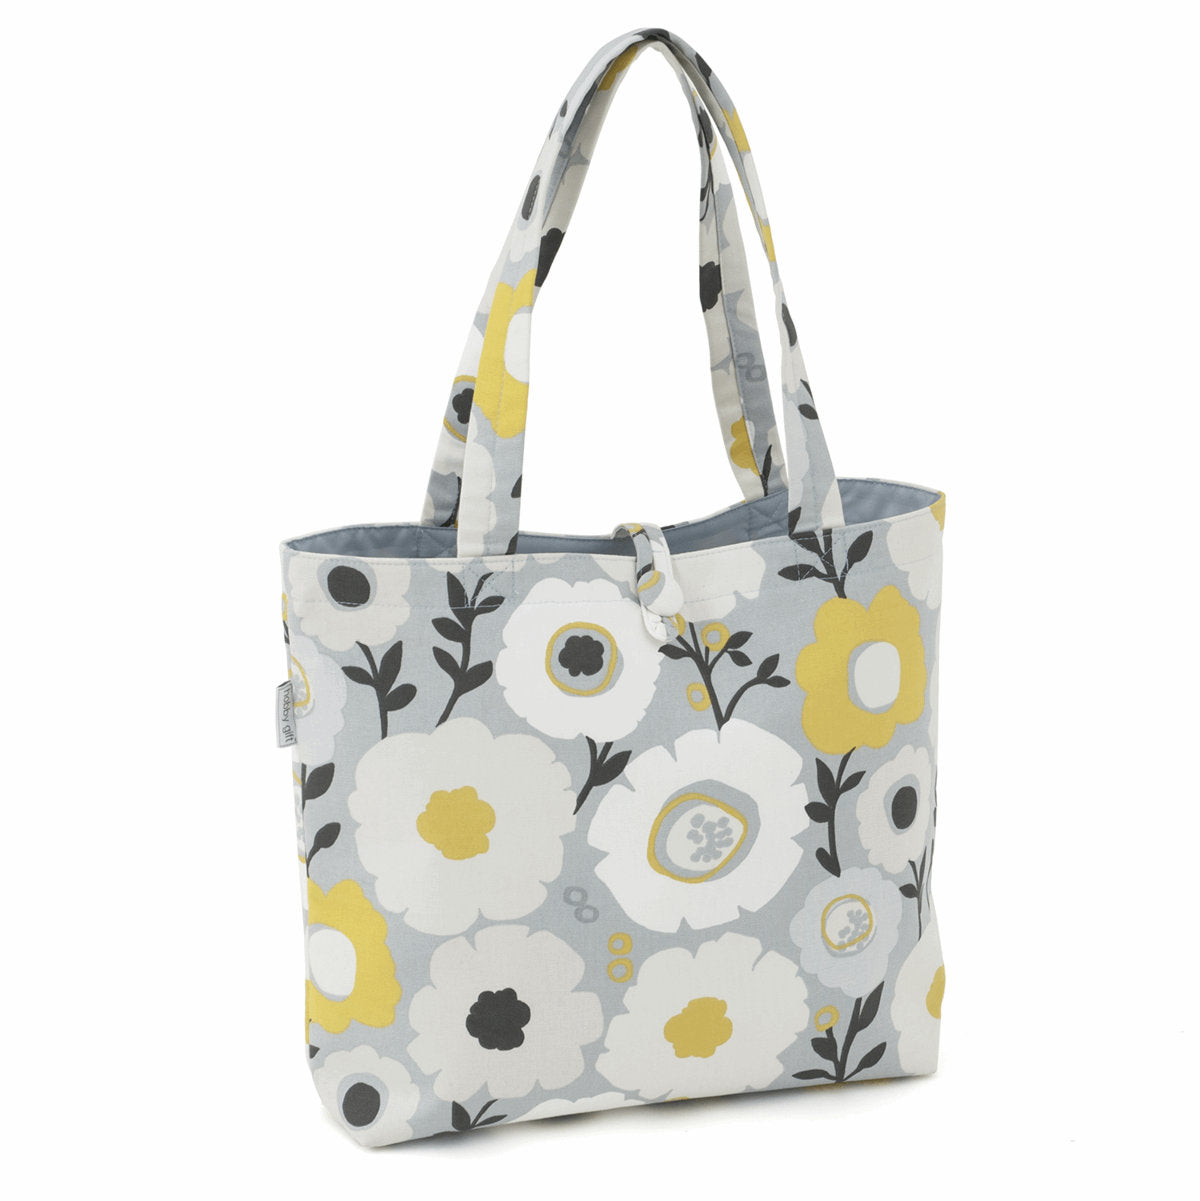 Scandi Floral Tote Bag. Sewing organisation, shopping bag or sewing gift. Grey, mustard yellow fabric design.